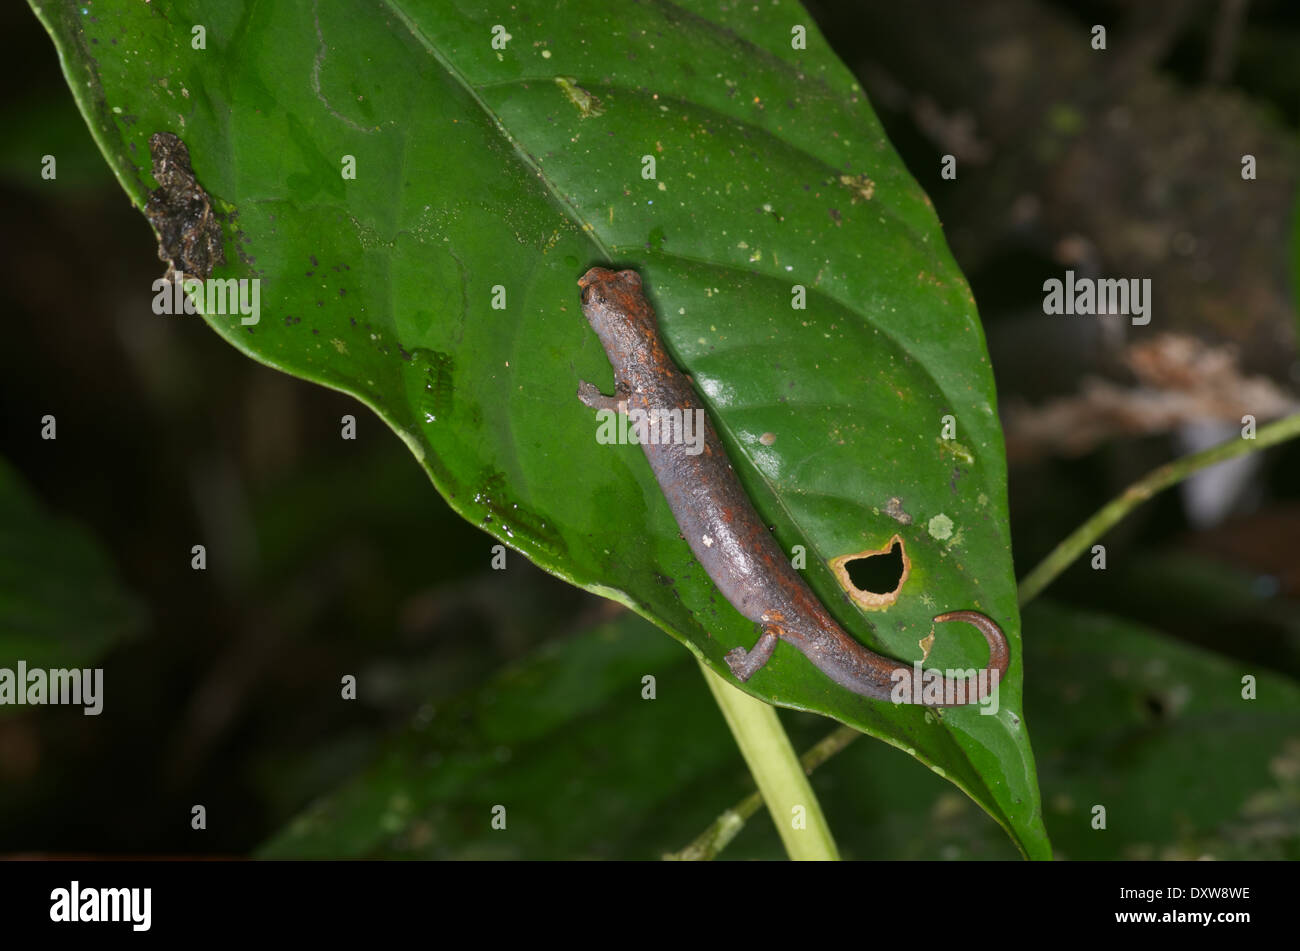 An Amazon Climbing Salamander (Bolitoglossa altamazonica) on a leaf at night in the Amazon basin in Peru. Stock Photo